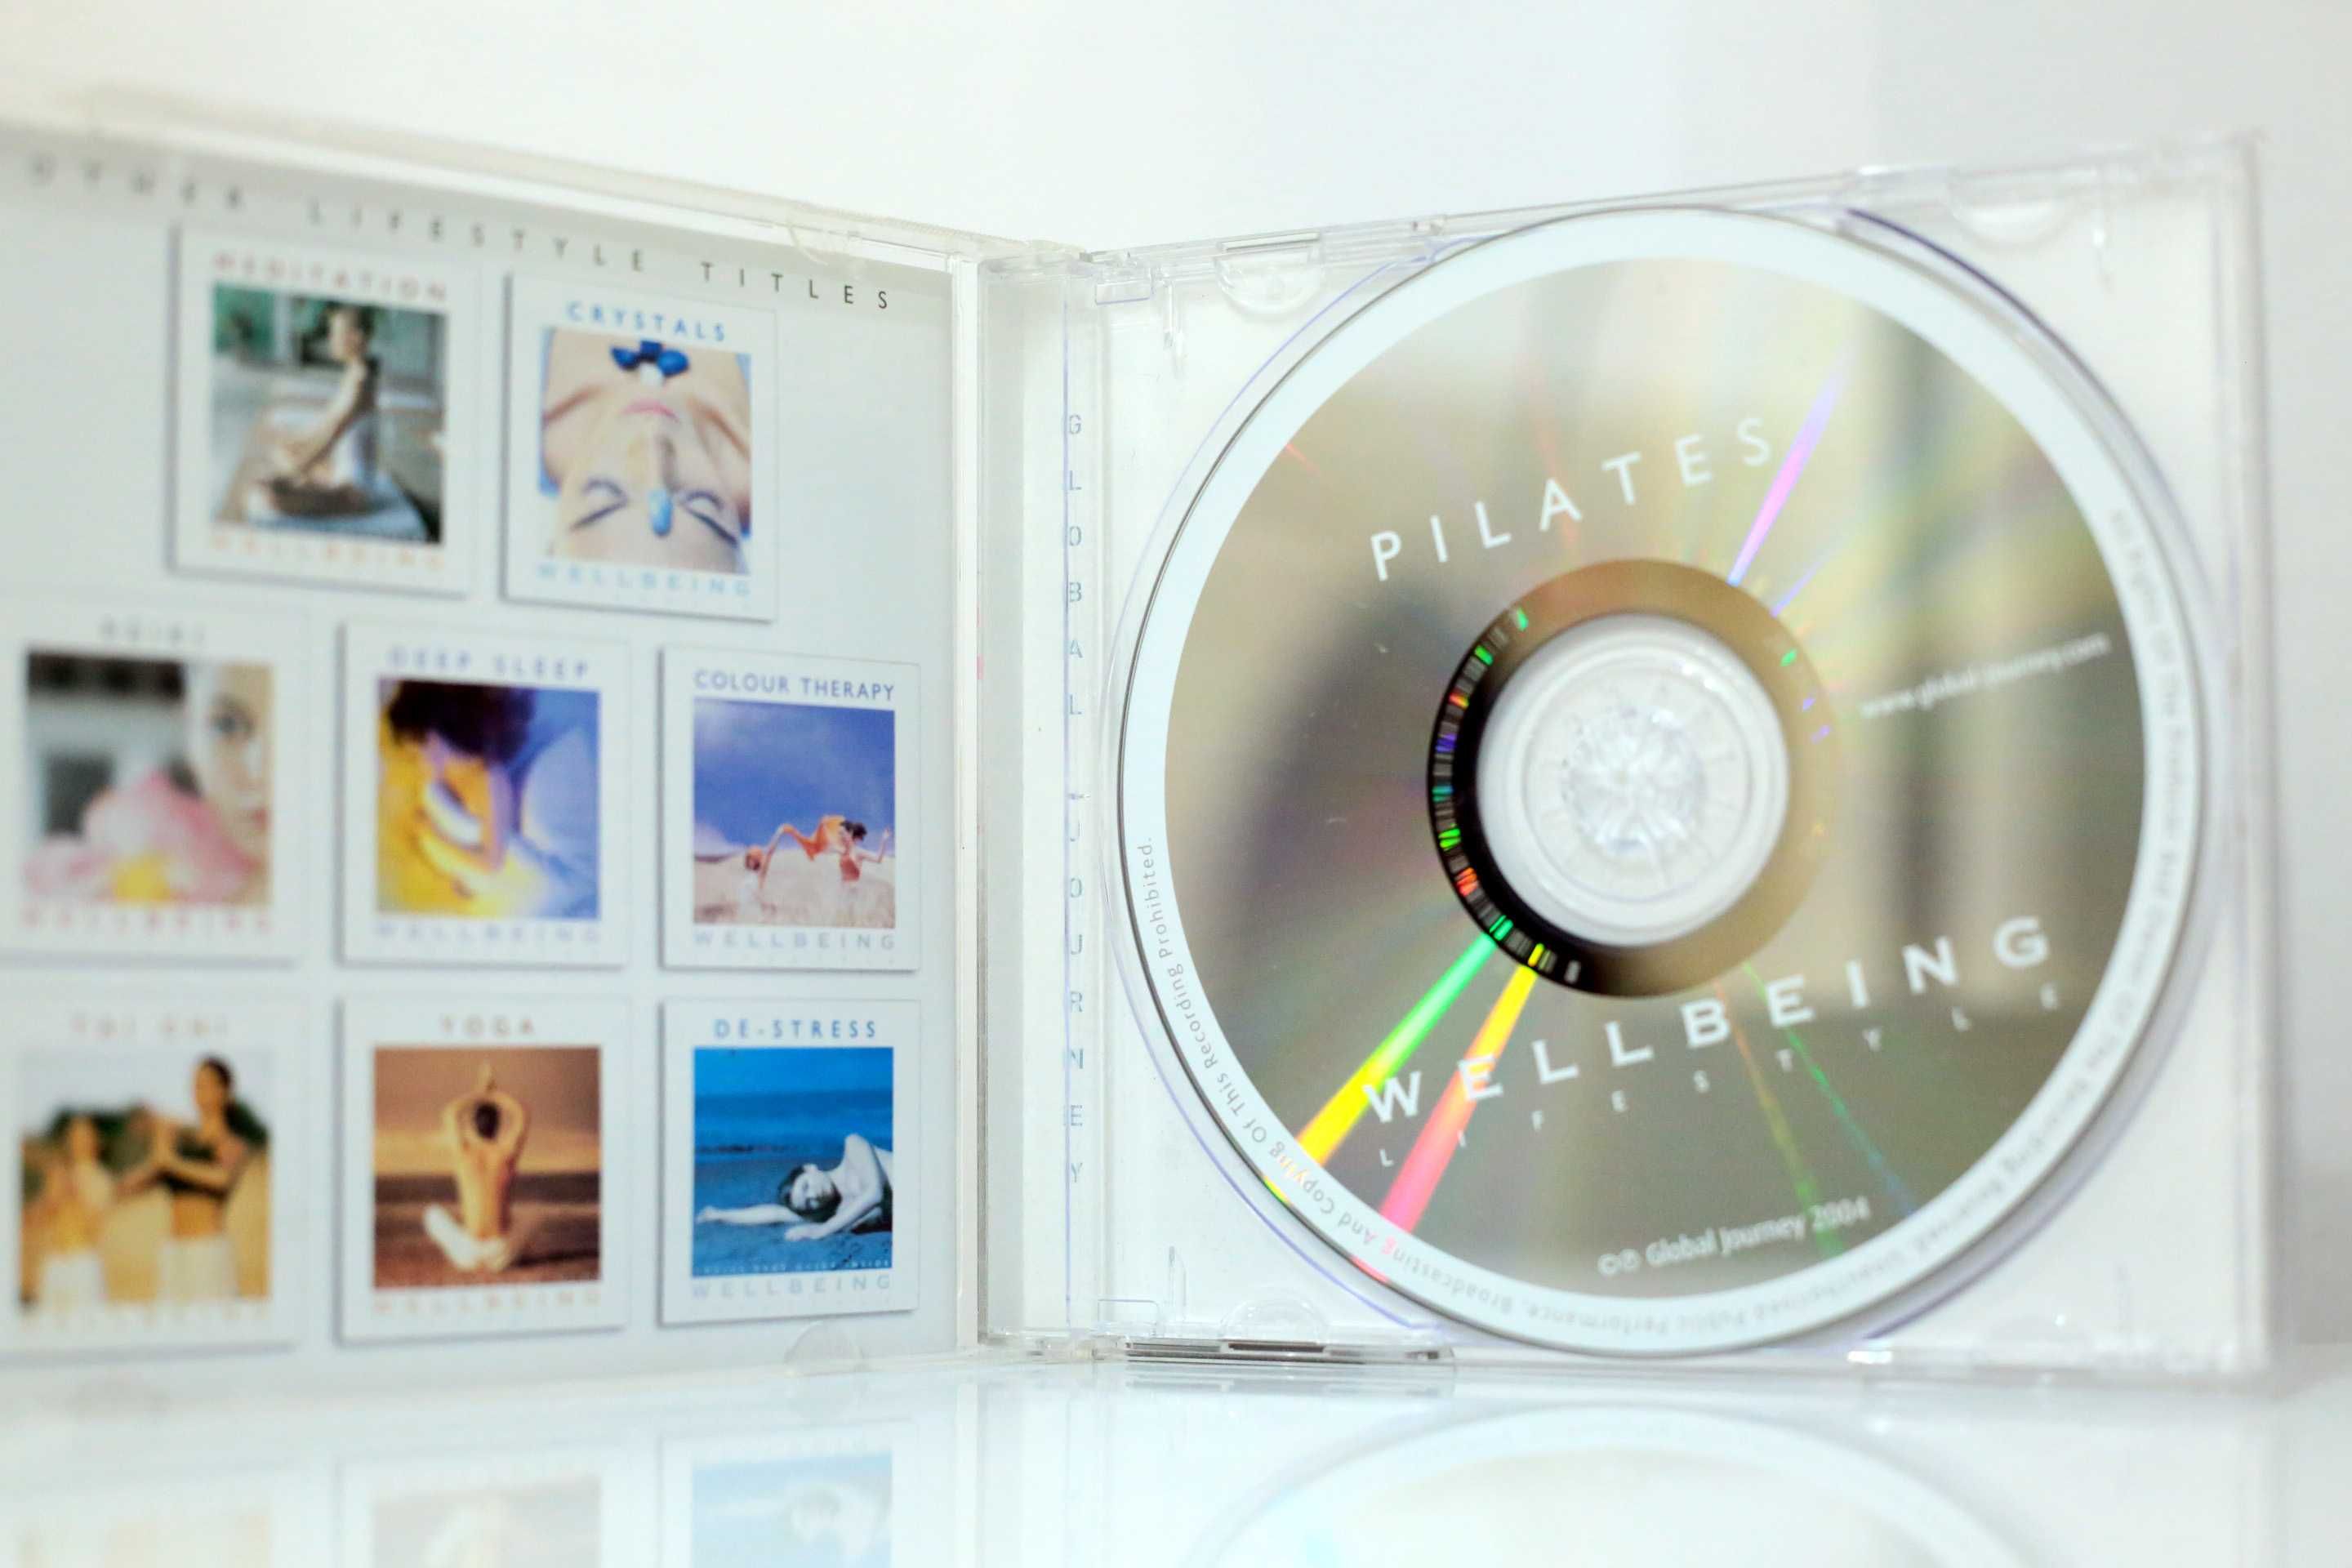 (c) CD PILATES - Wellbeing